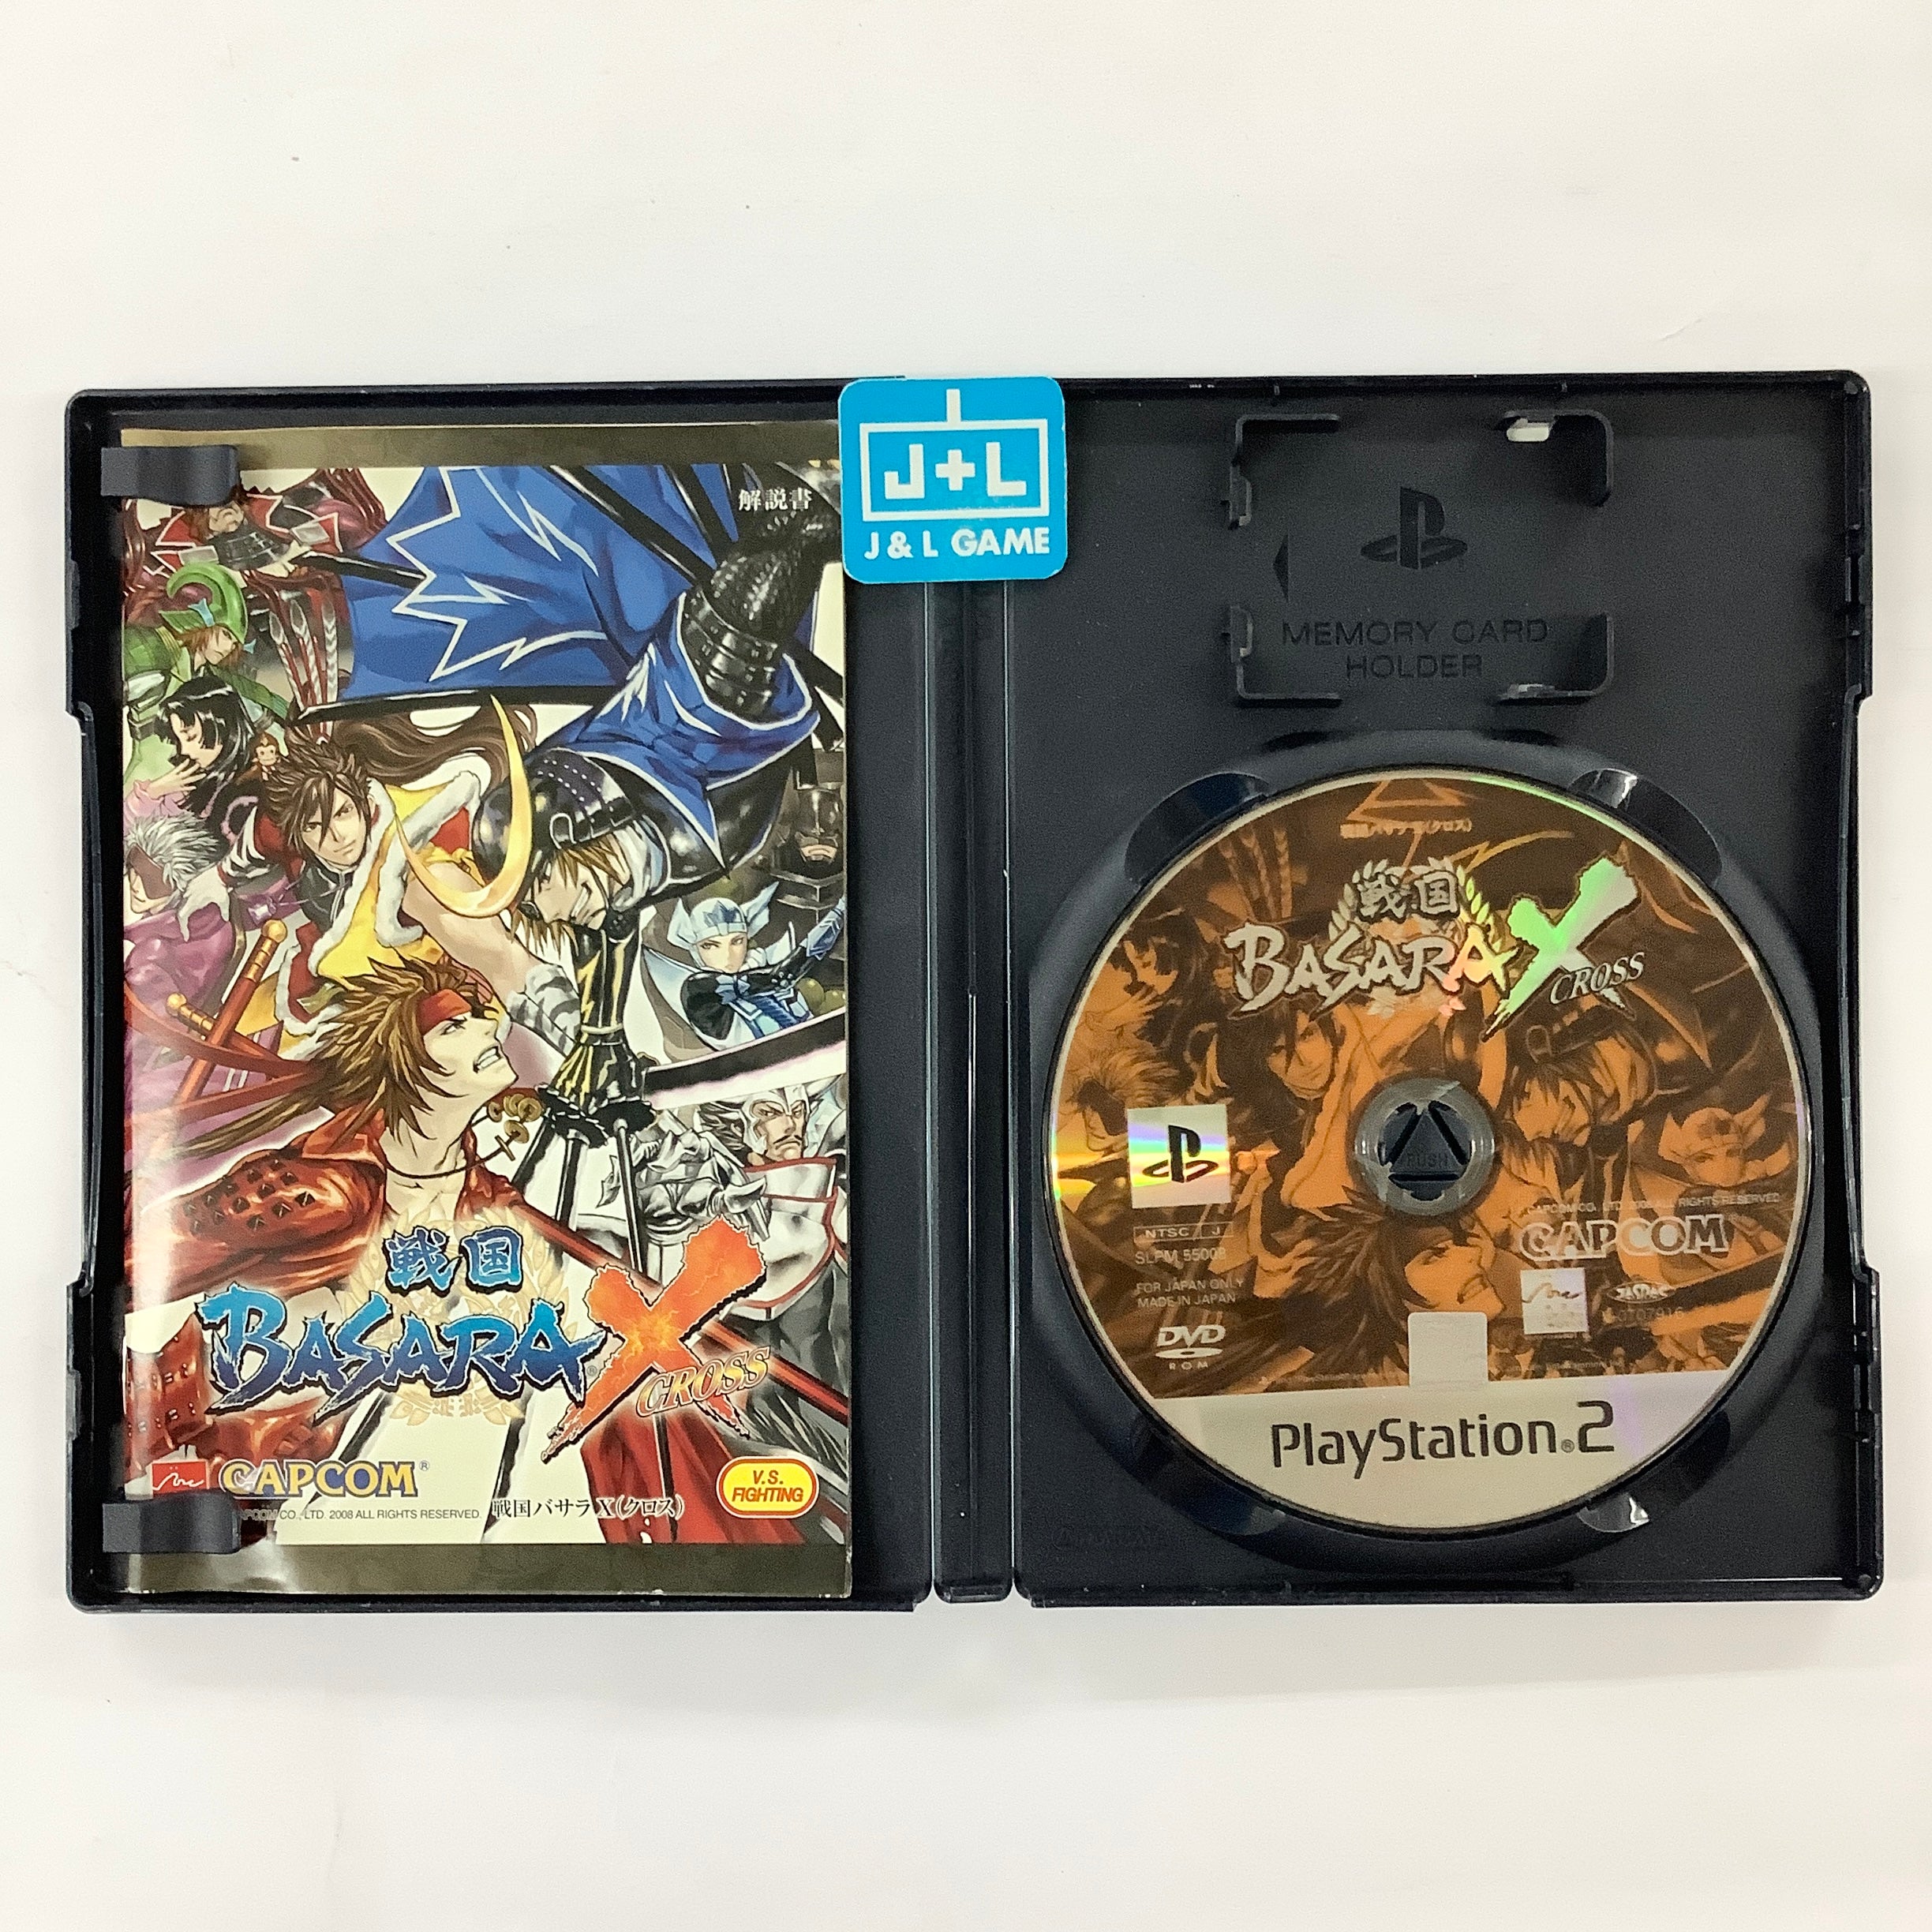 Sengoku Basara X - (PS2) PlayStation 2 (Japanese Import) [Pre-Owned] Video Games Capcom   